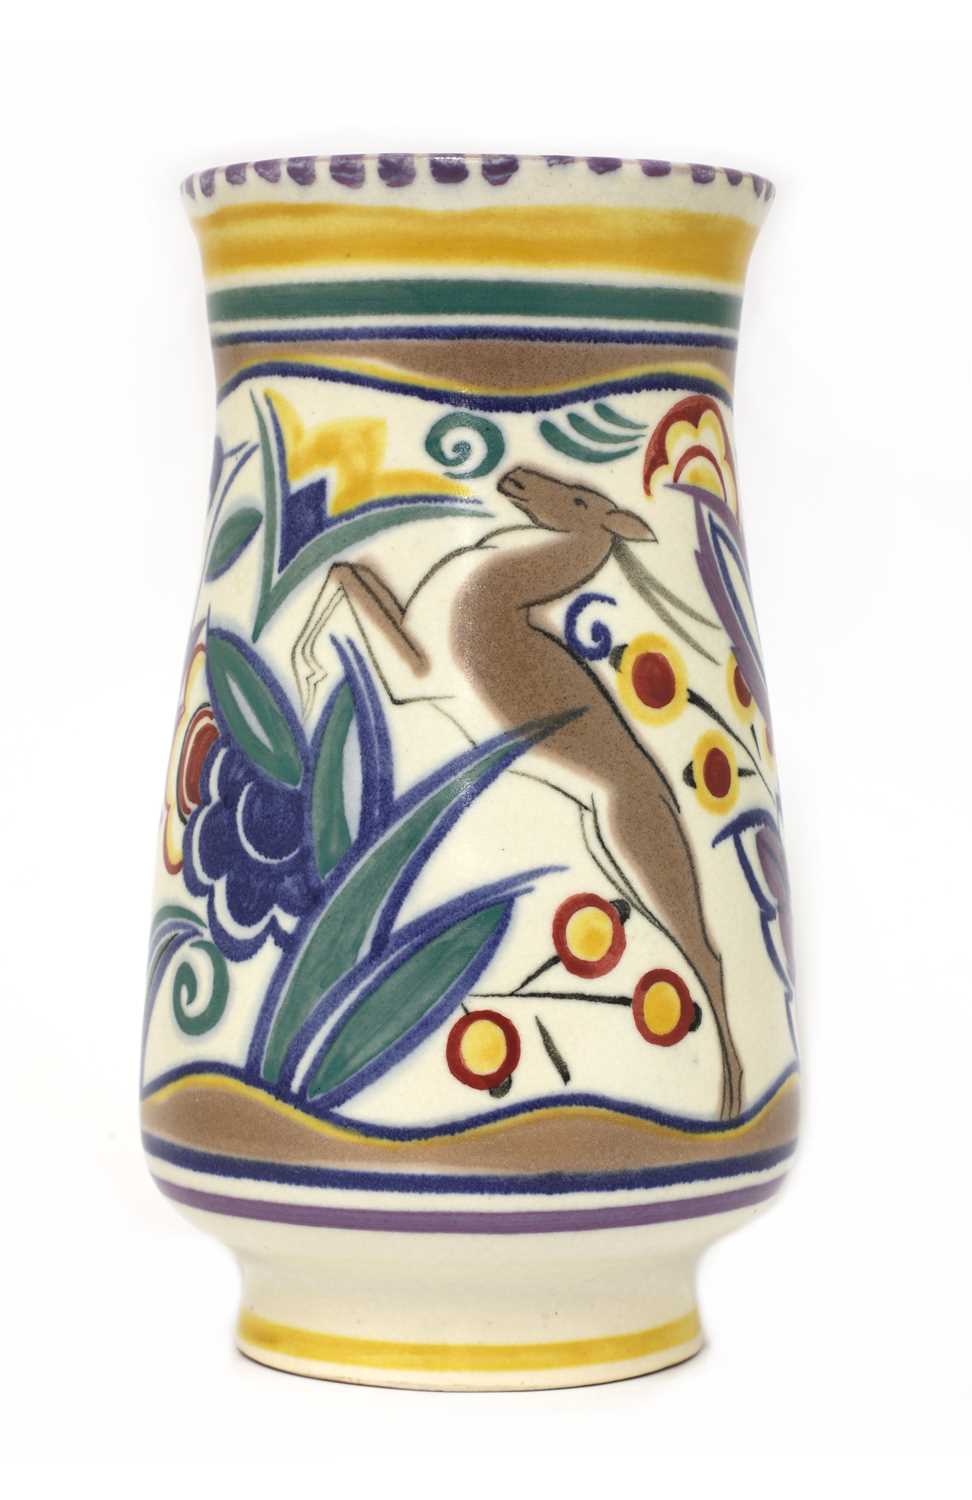 Lot 502 - A Poole Pottery vase